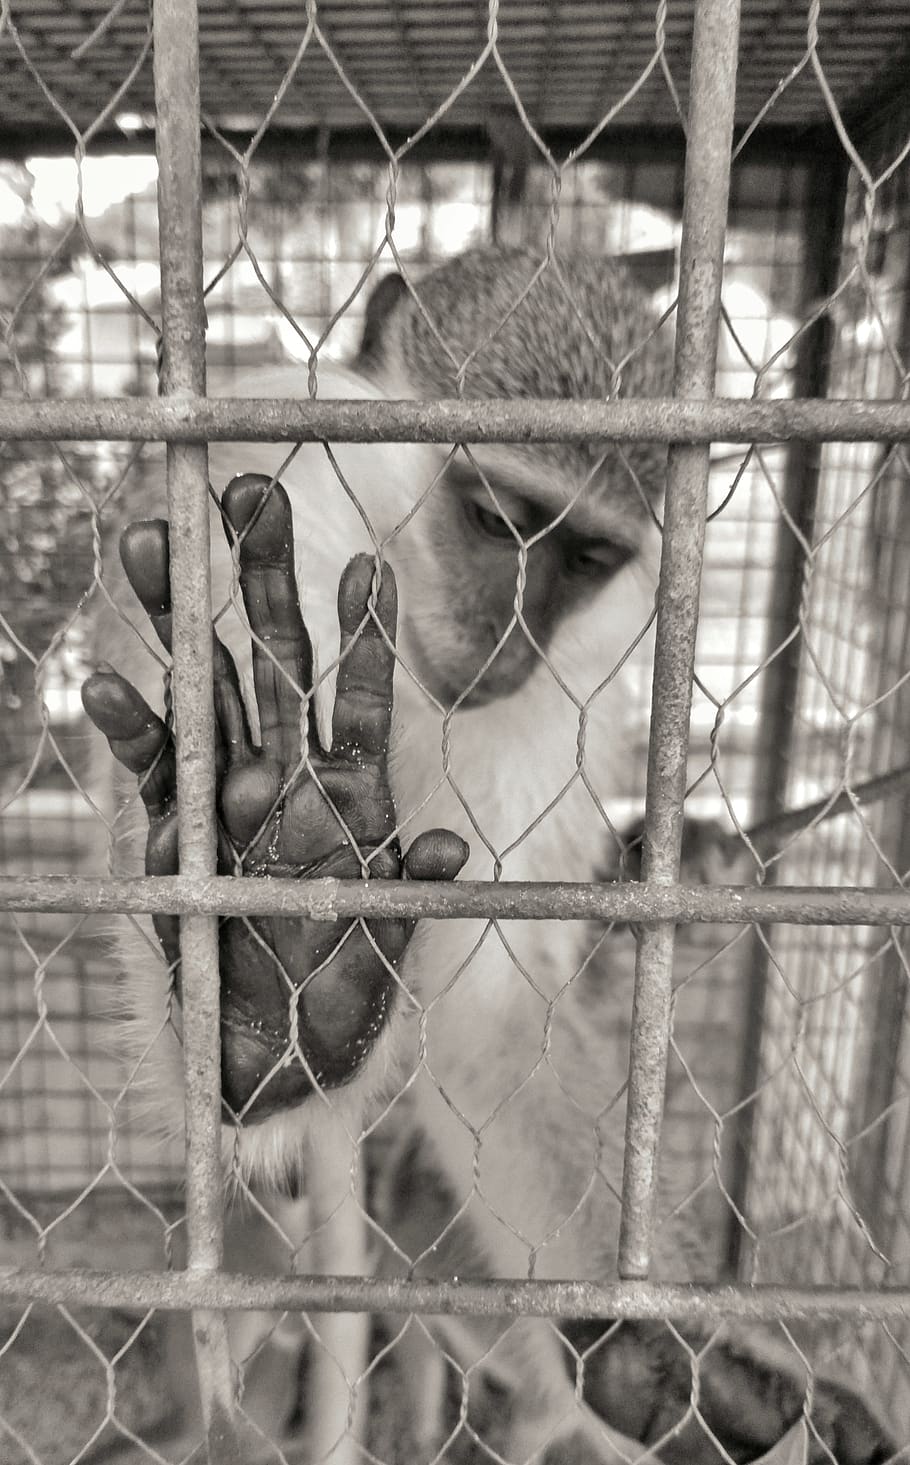 monkey, feelings, sadness, animal, sorry, human, fence, boundary, barrier, vertebrate